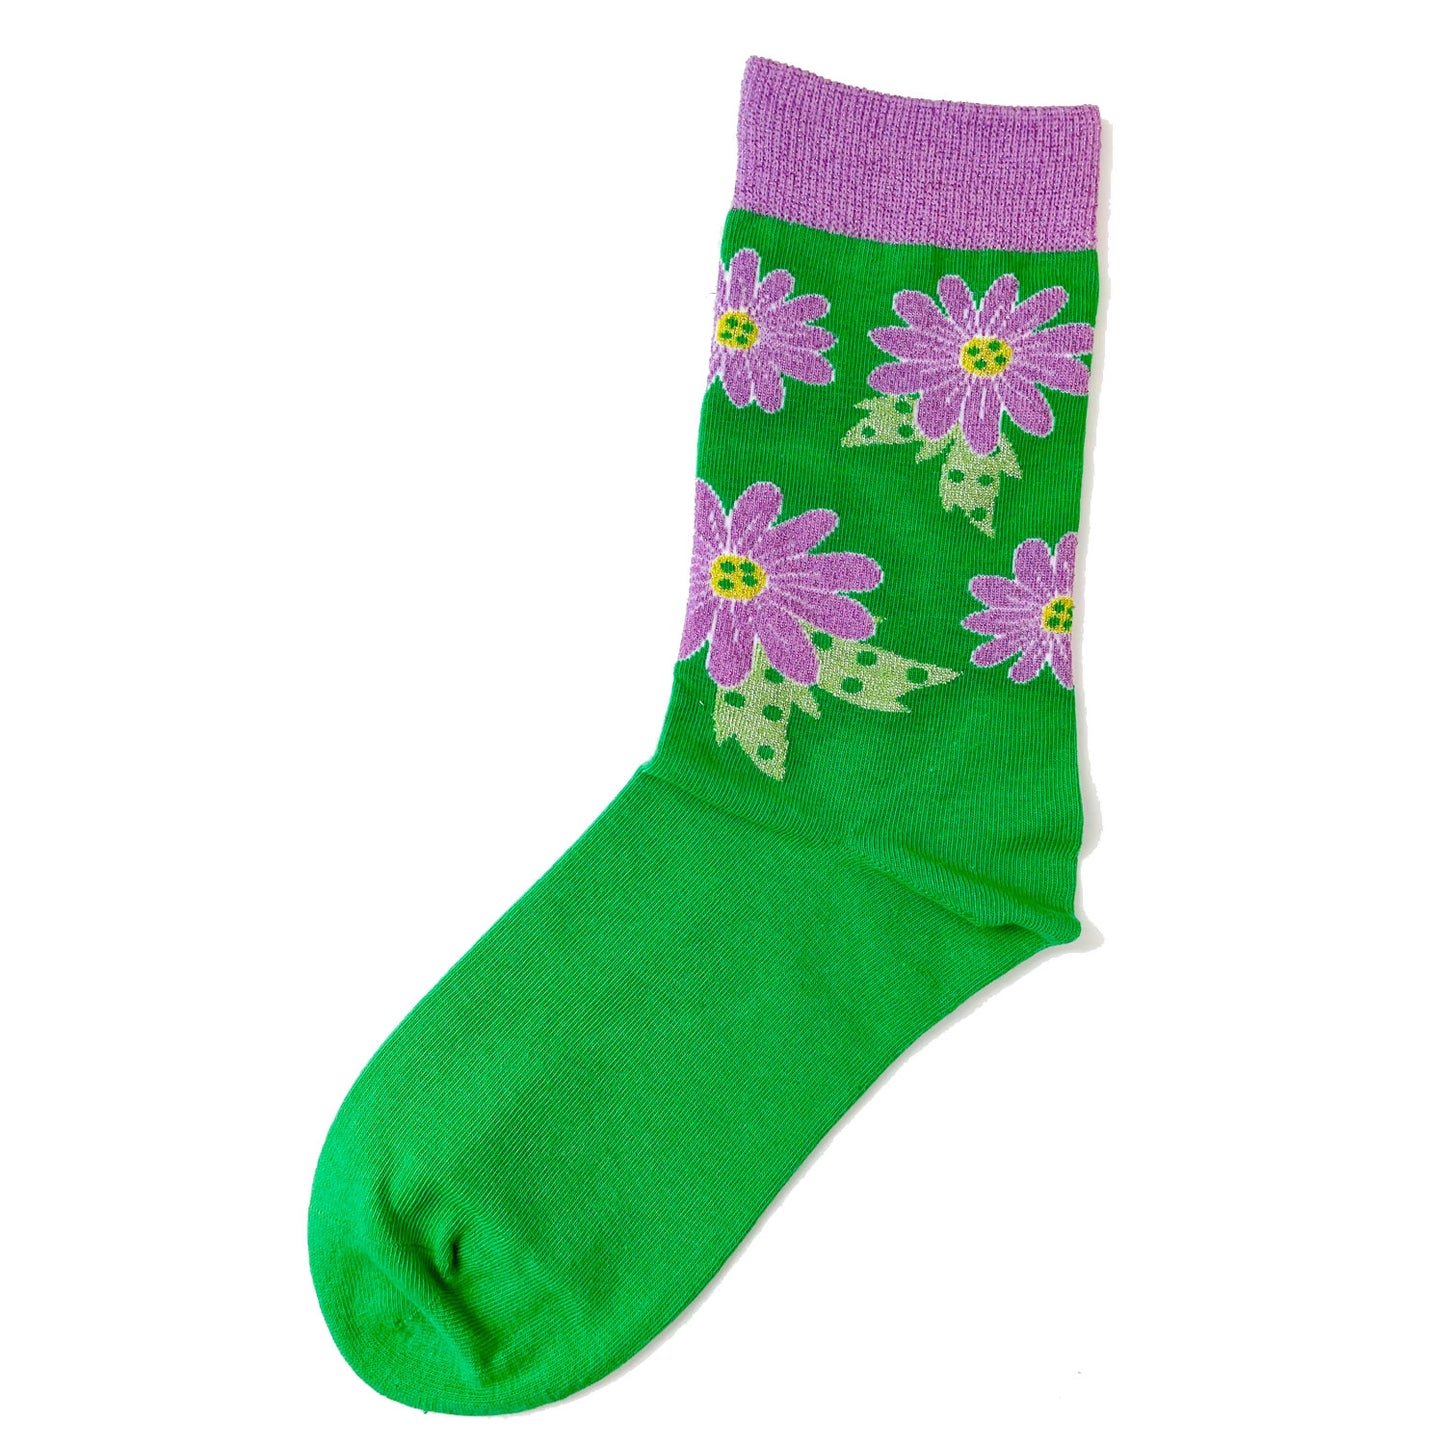 Green sock with purple flowers.